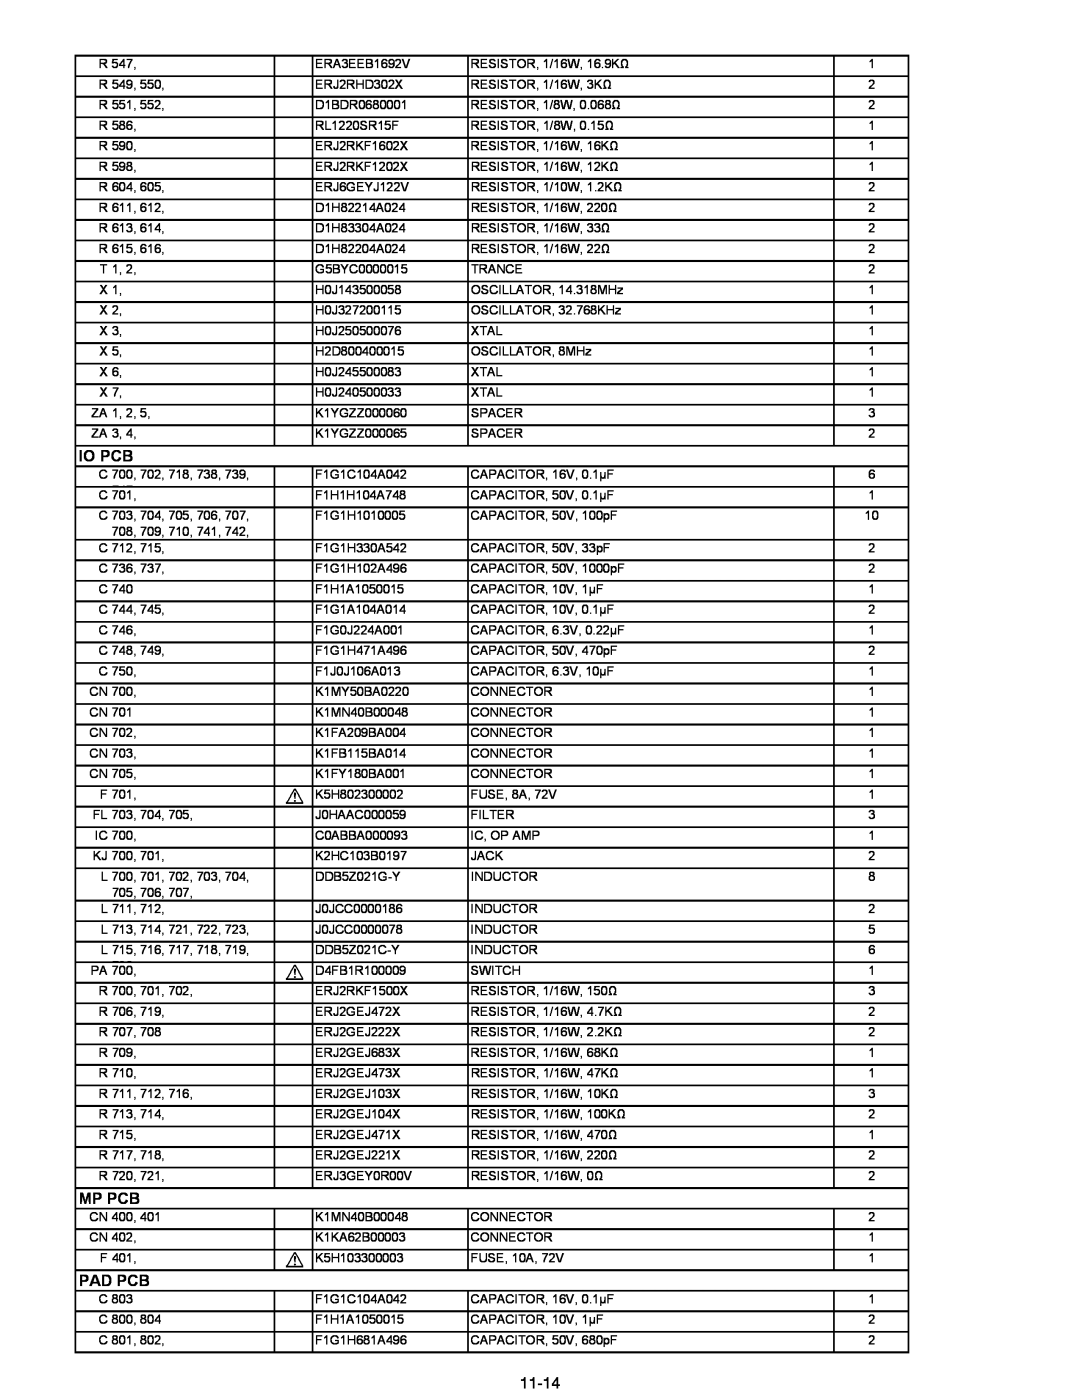 Matsushita CF-30 service manual Io Pcb, Mp Pcb, Pad Pcb, 11-14 